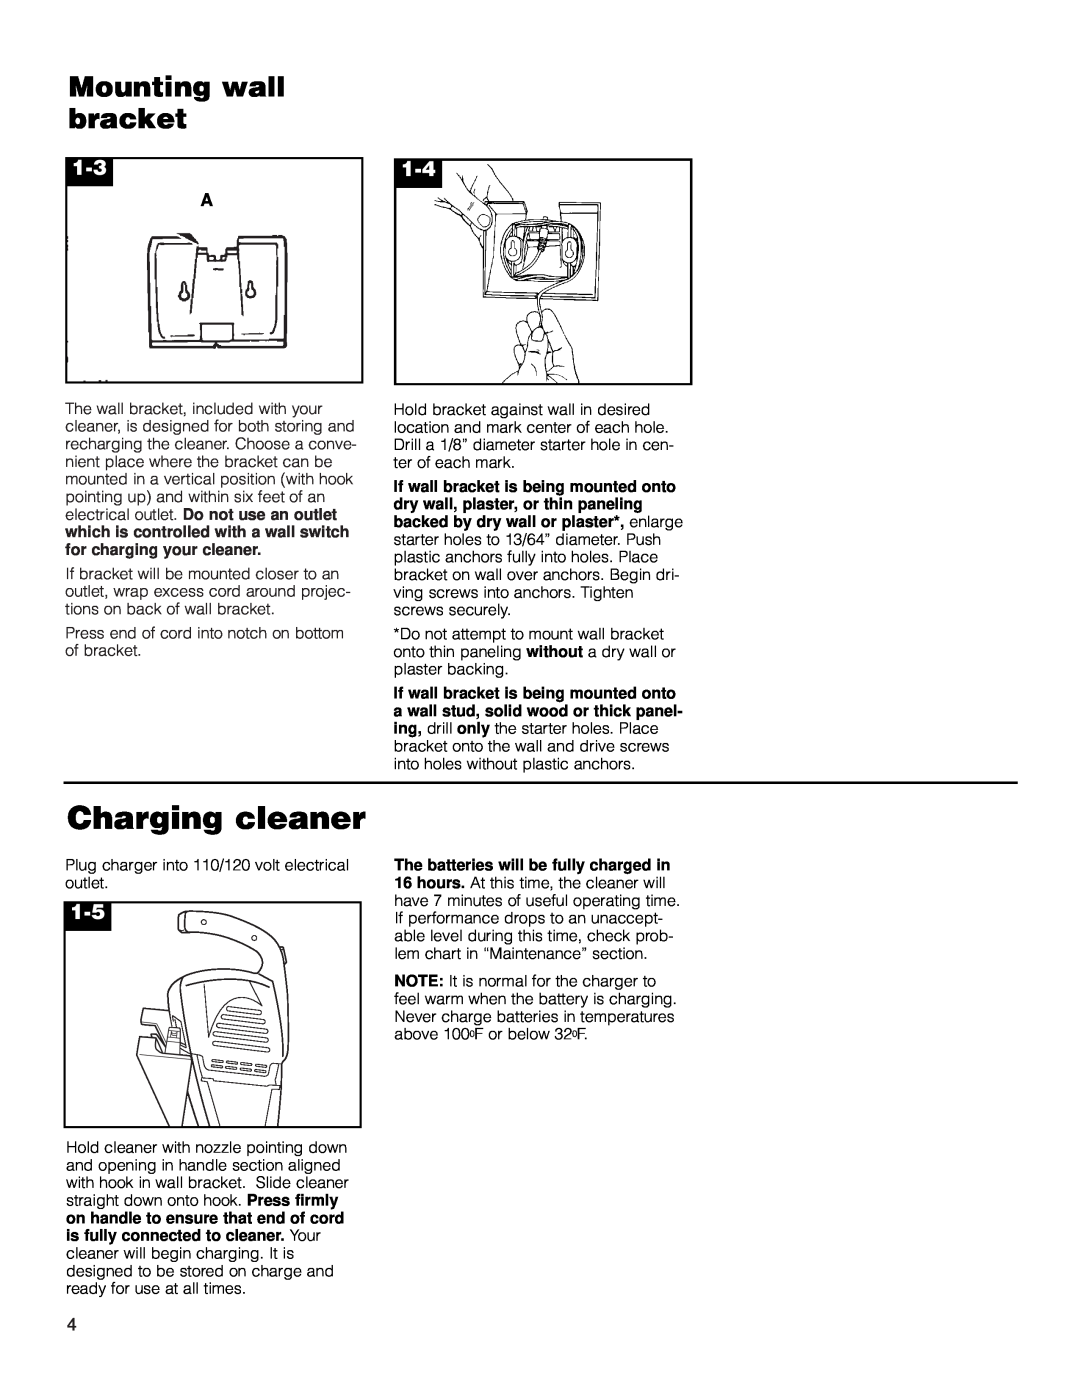 Hoover HandVac owner manual Charging cleaner, Mounting wall bracket 